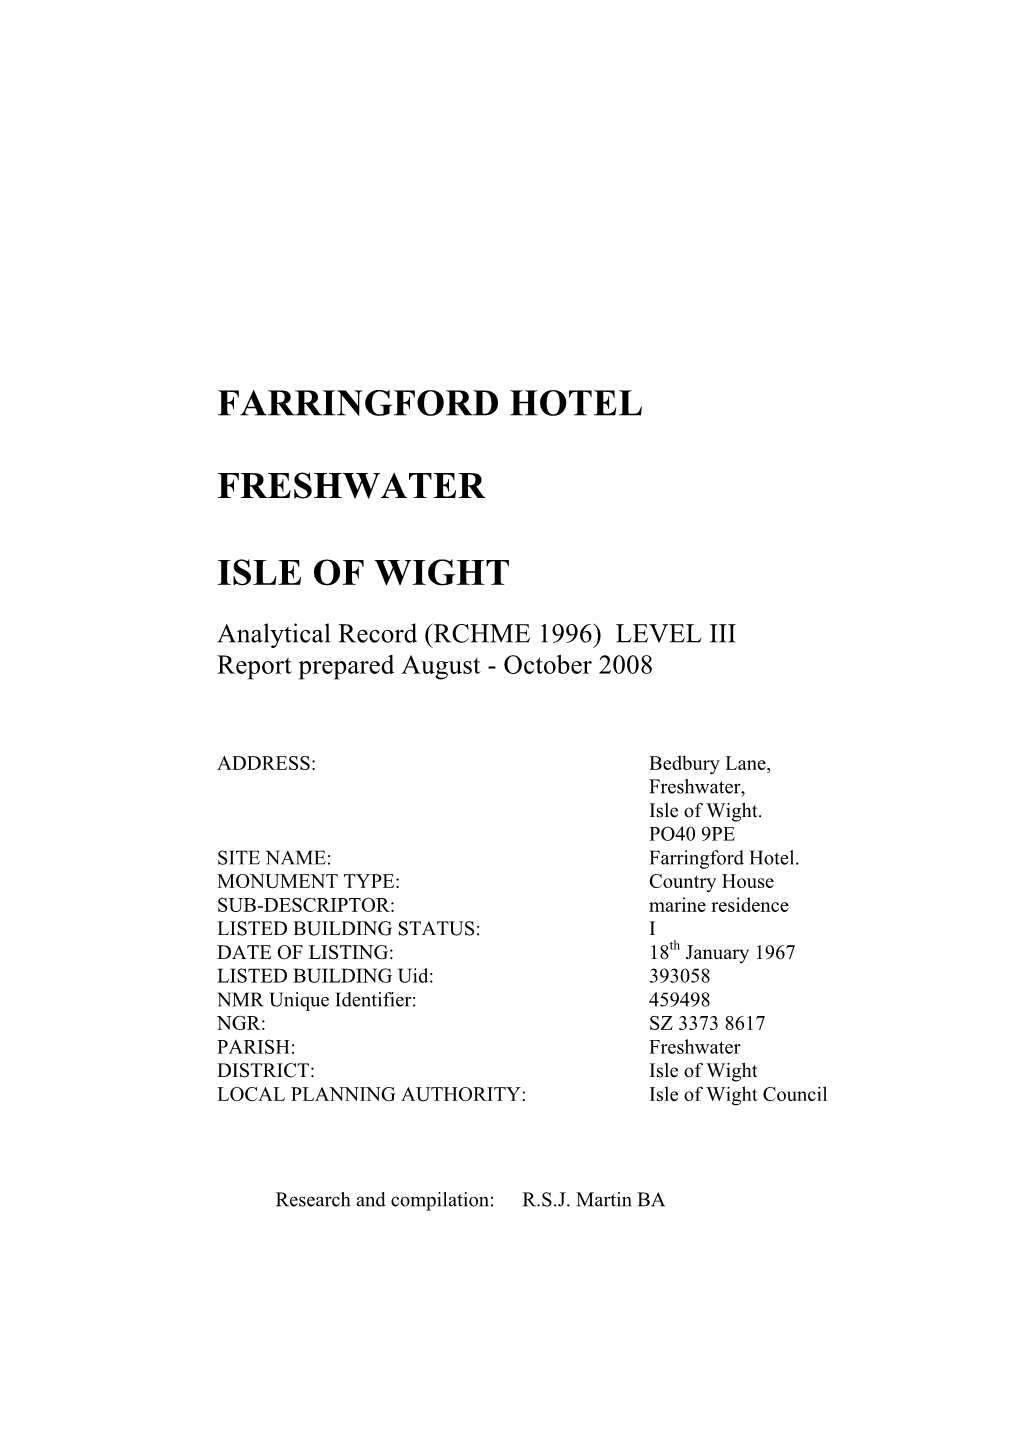 Farringford Hotel Freshwater Isle of Wight